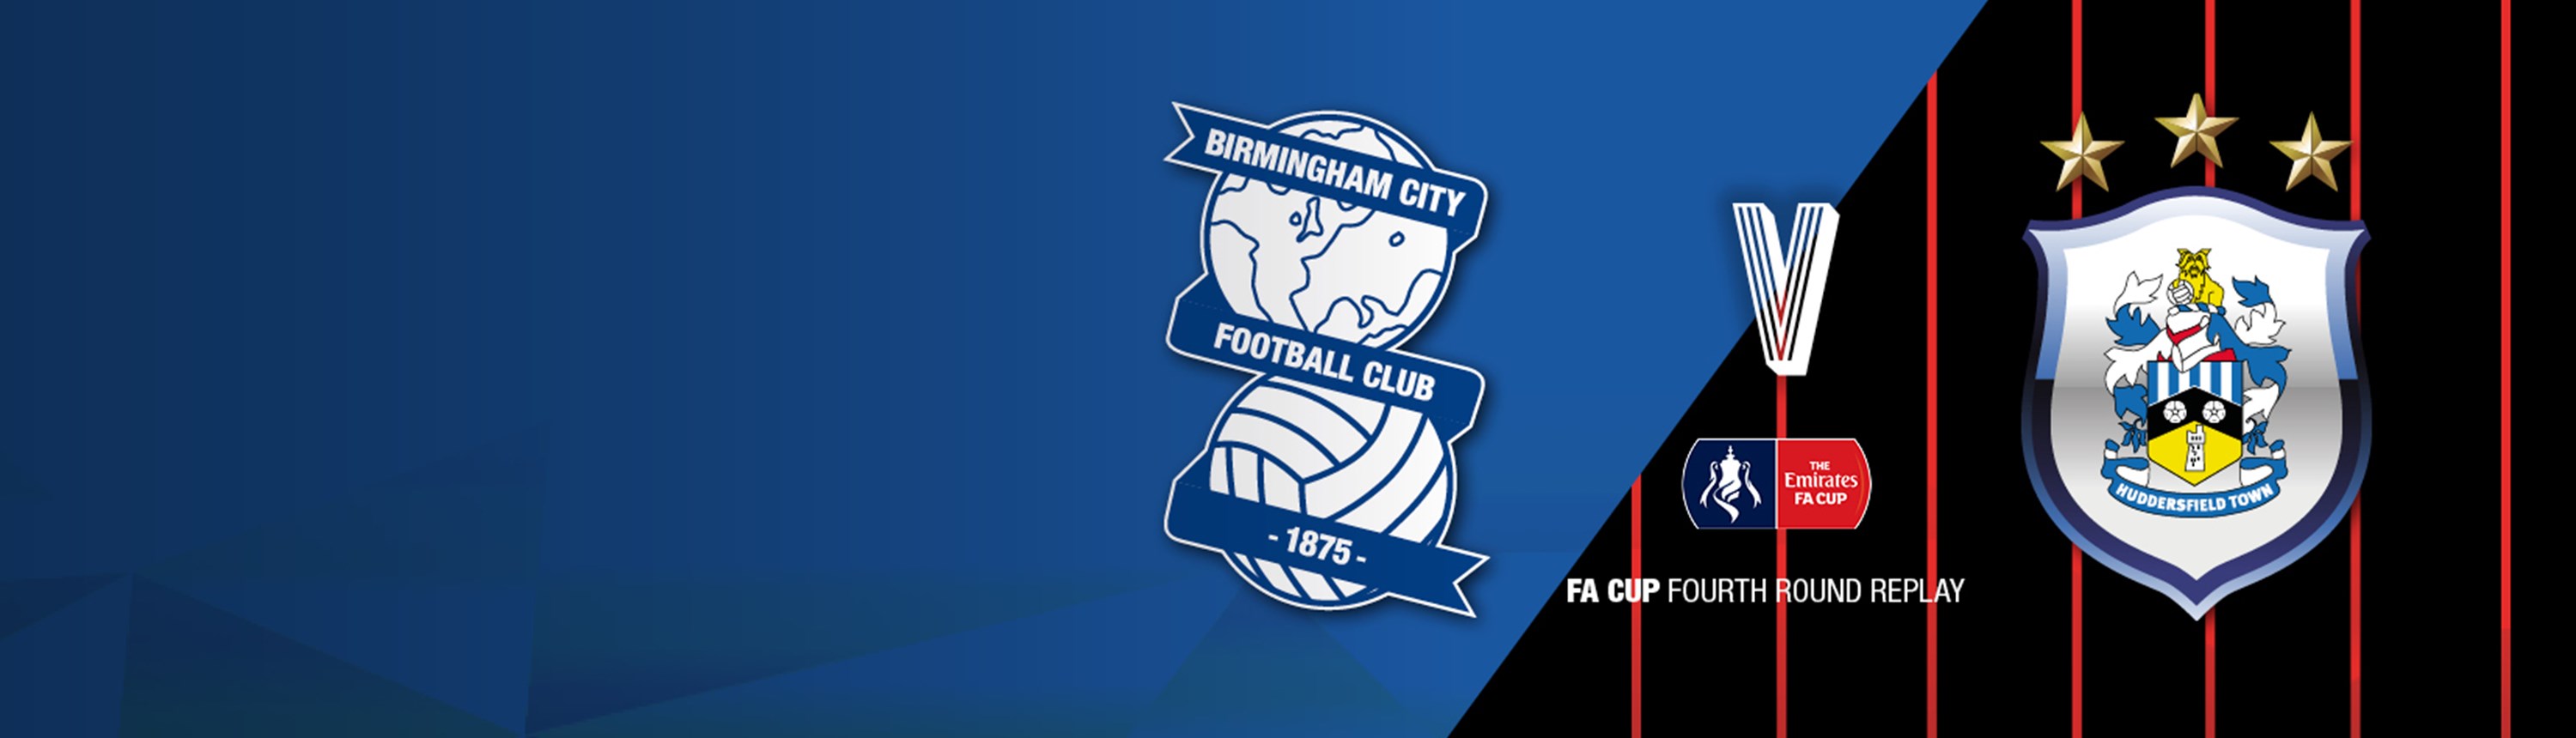 Home | Birmingham City Football Club